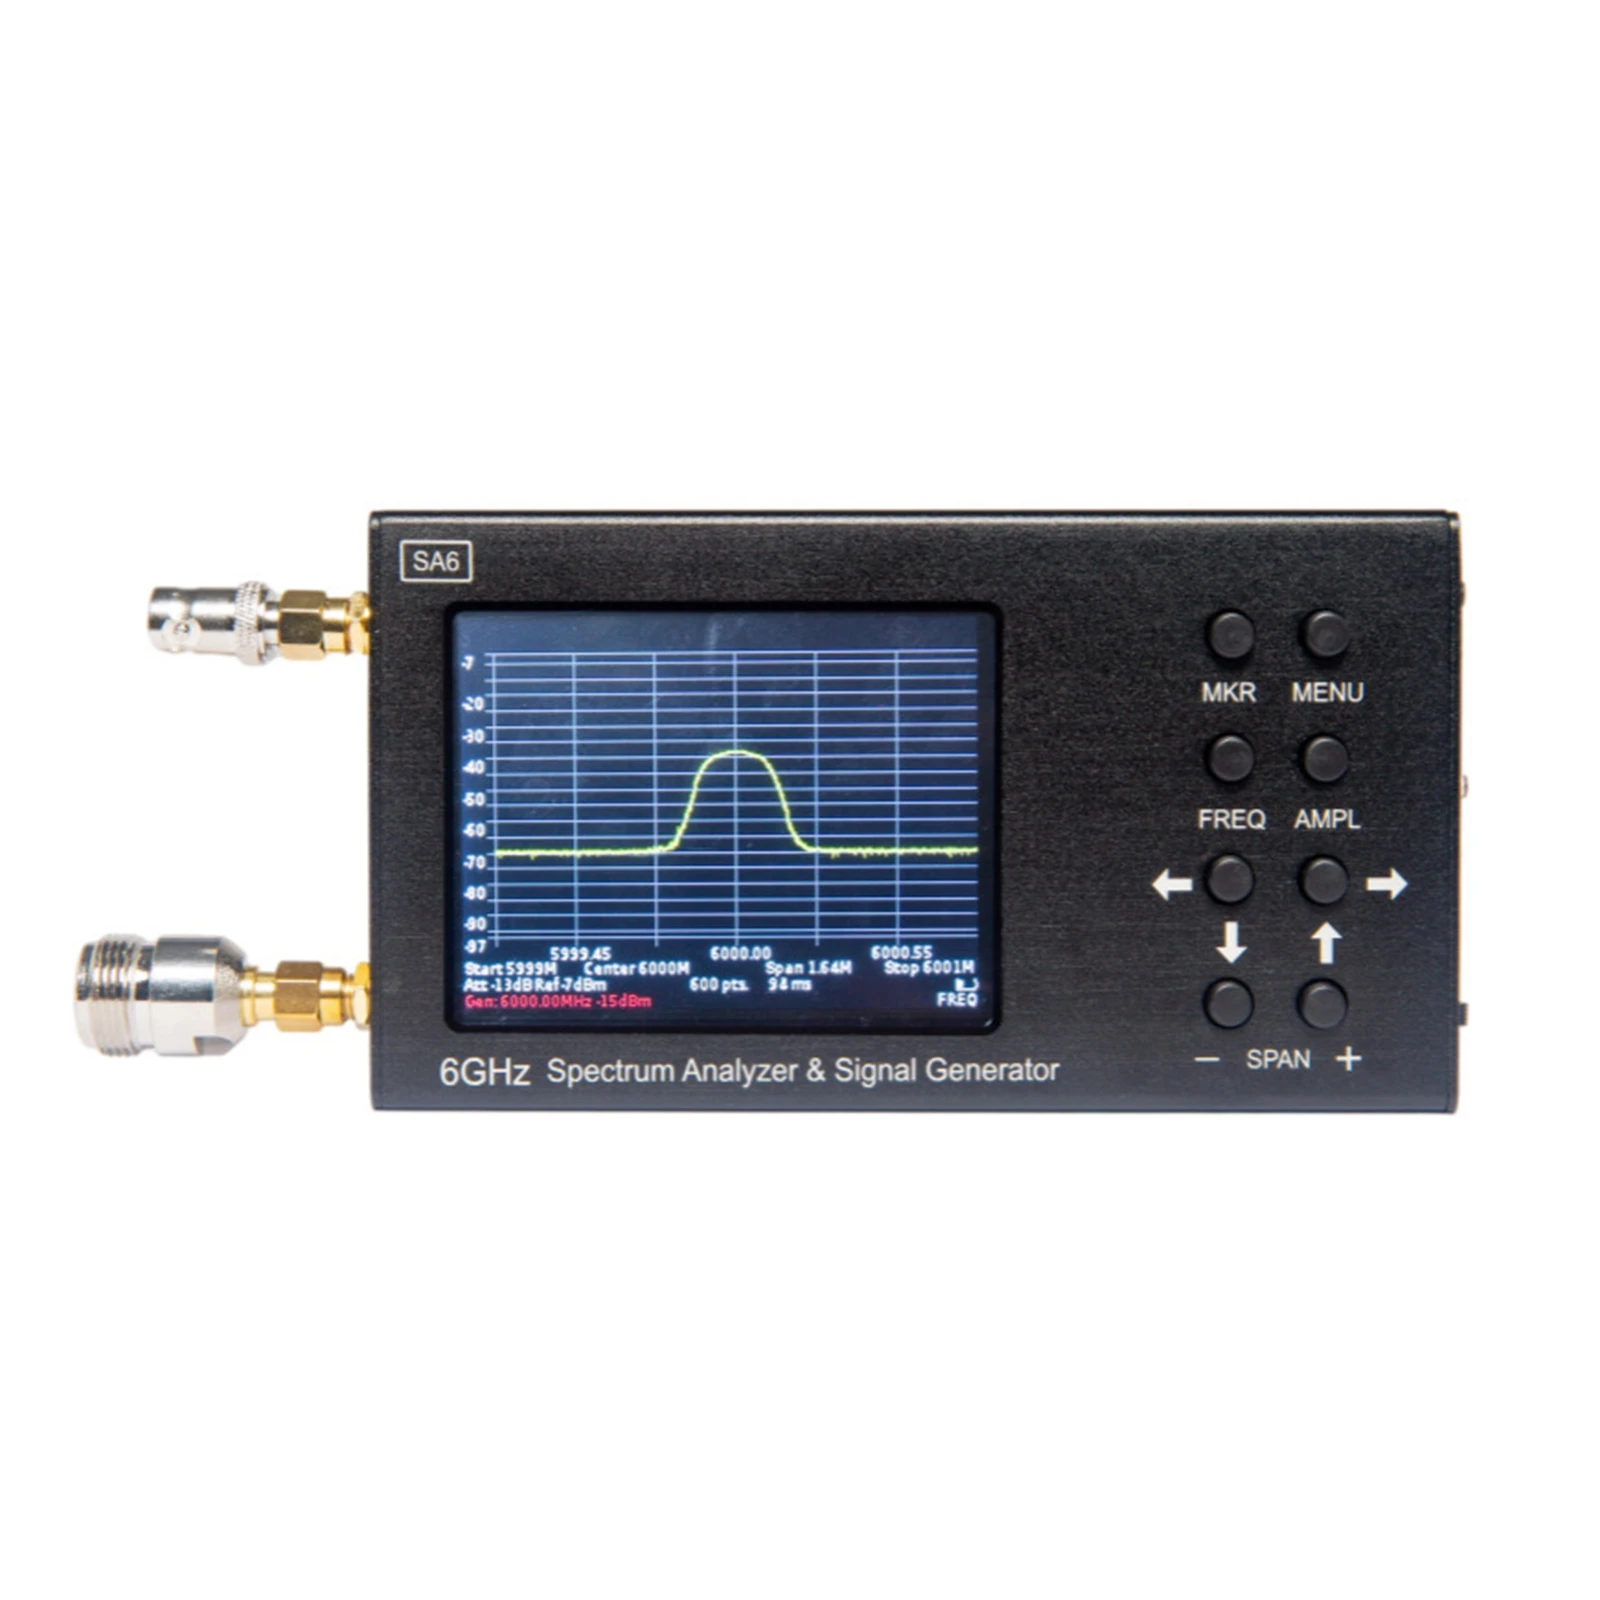 SA6  6GHz spectrum analyzer signal generator WiFi  TO,2G,3G,4G,LTE, CDMA, DCS, GSM, GPRS, GLONASS images - 6